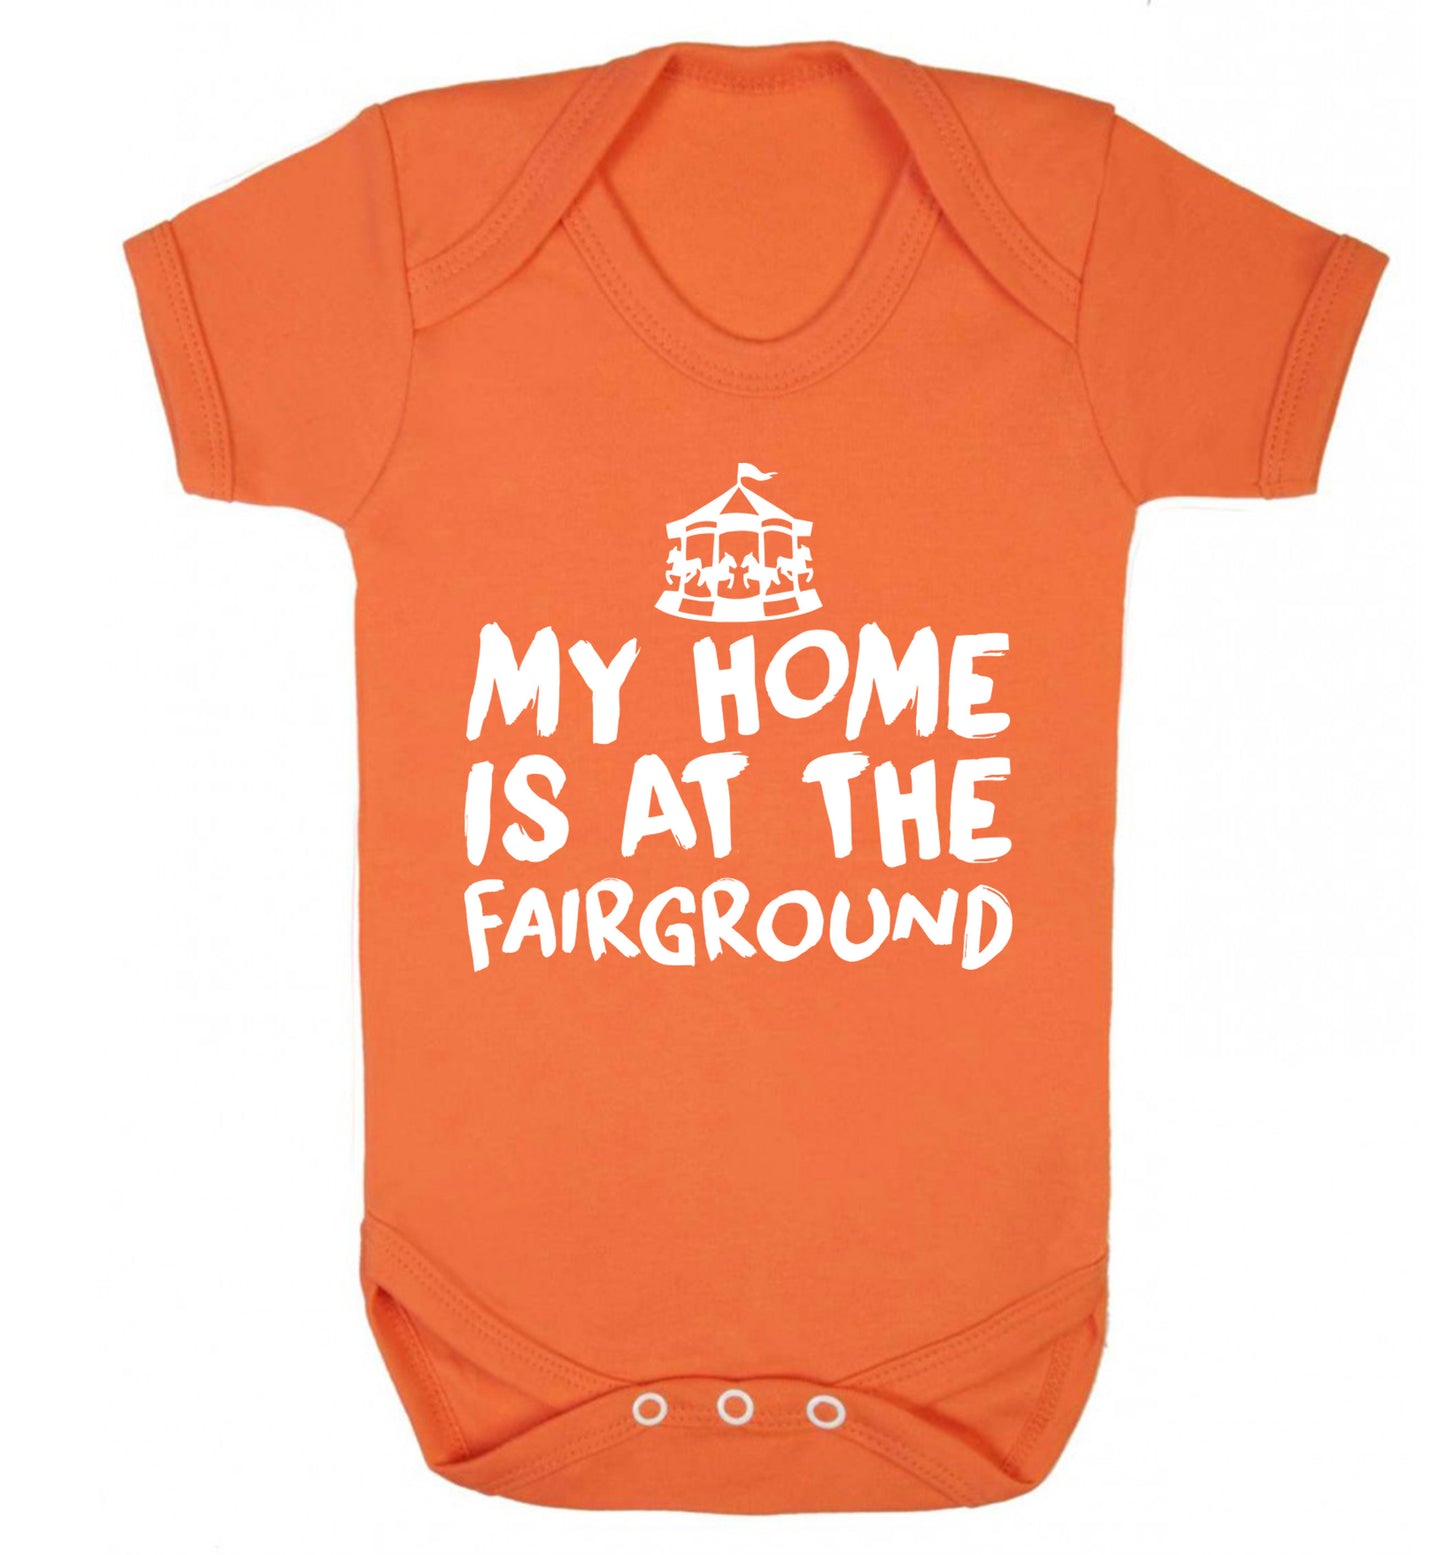 My home is at the fairground Baby Vest orange 18-24 months